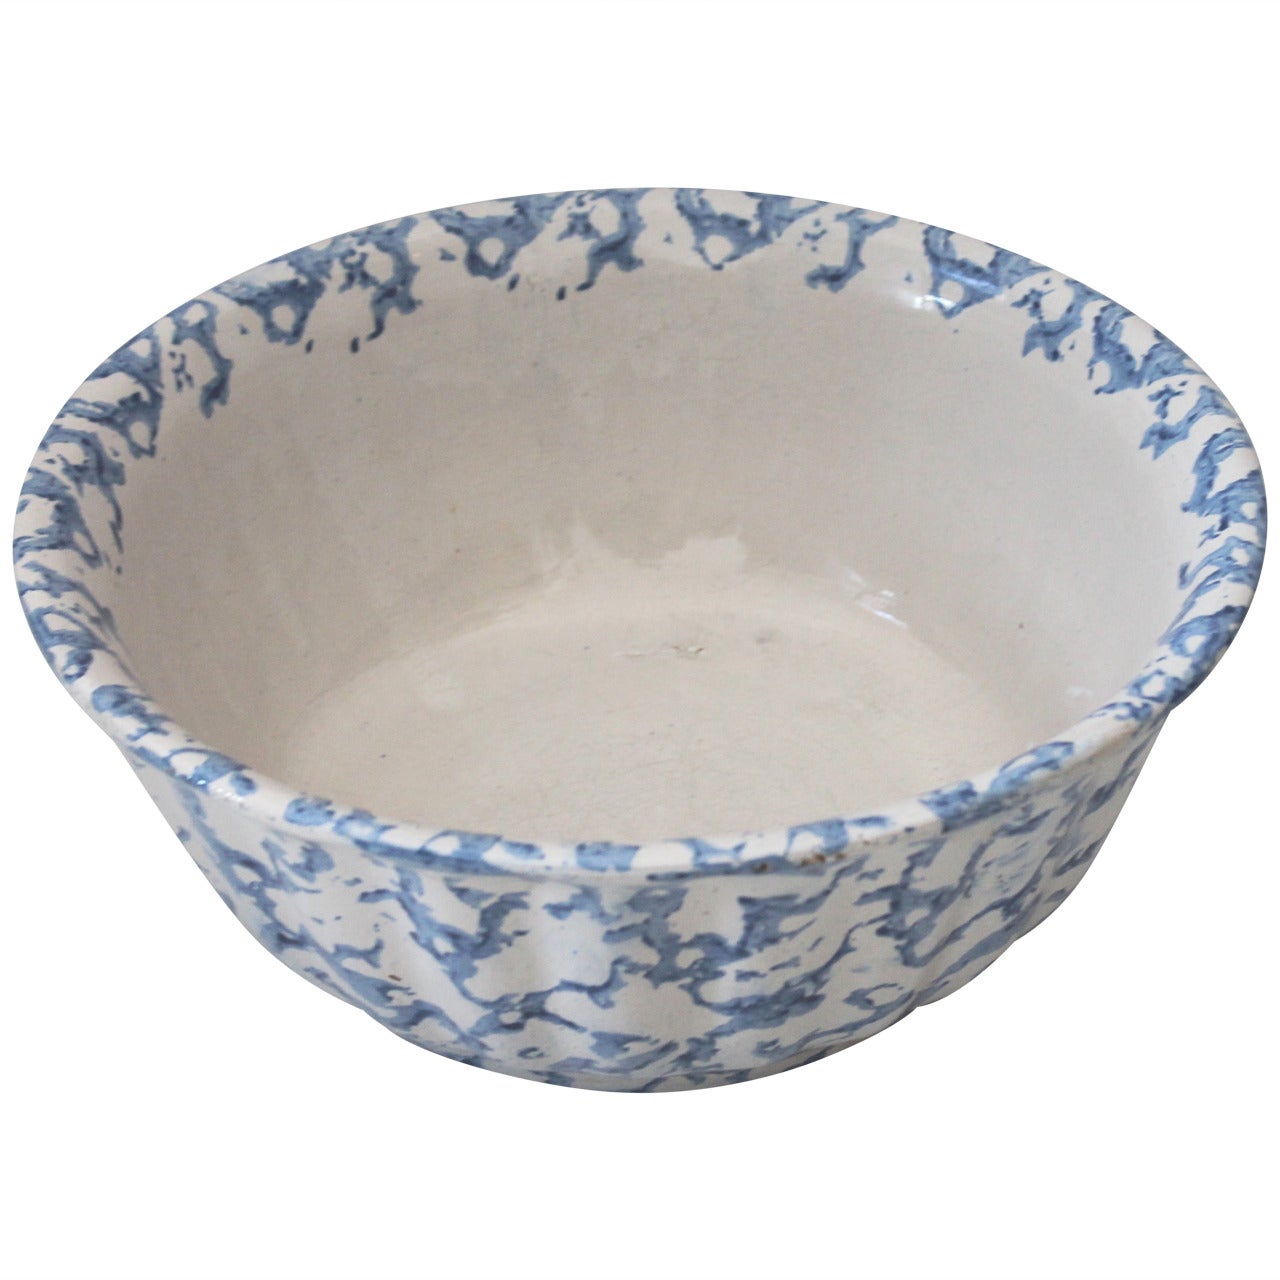 19th Century Sponge Ware Pottery Serving Bowl